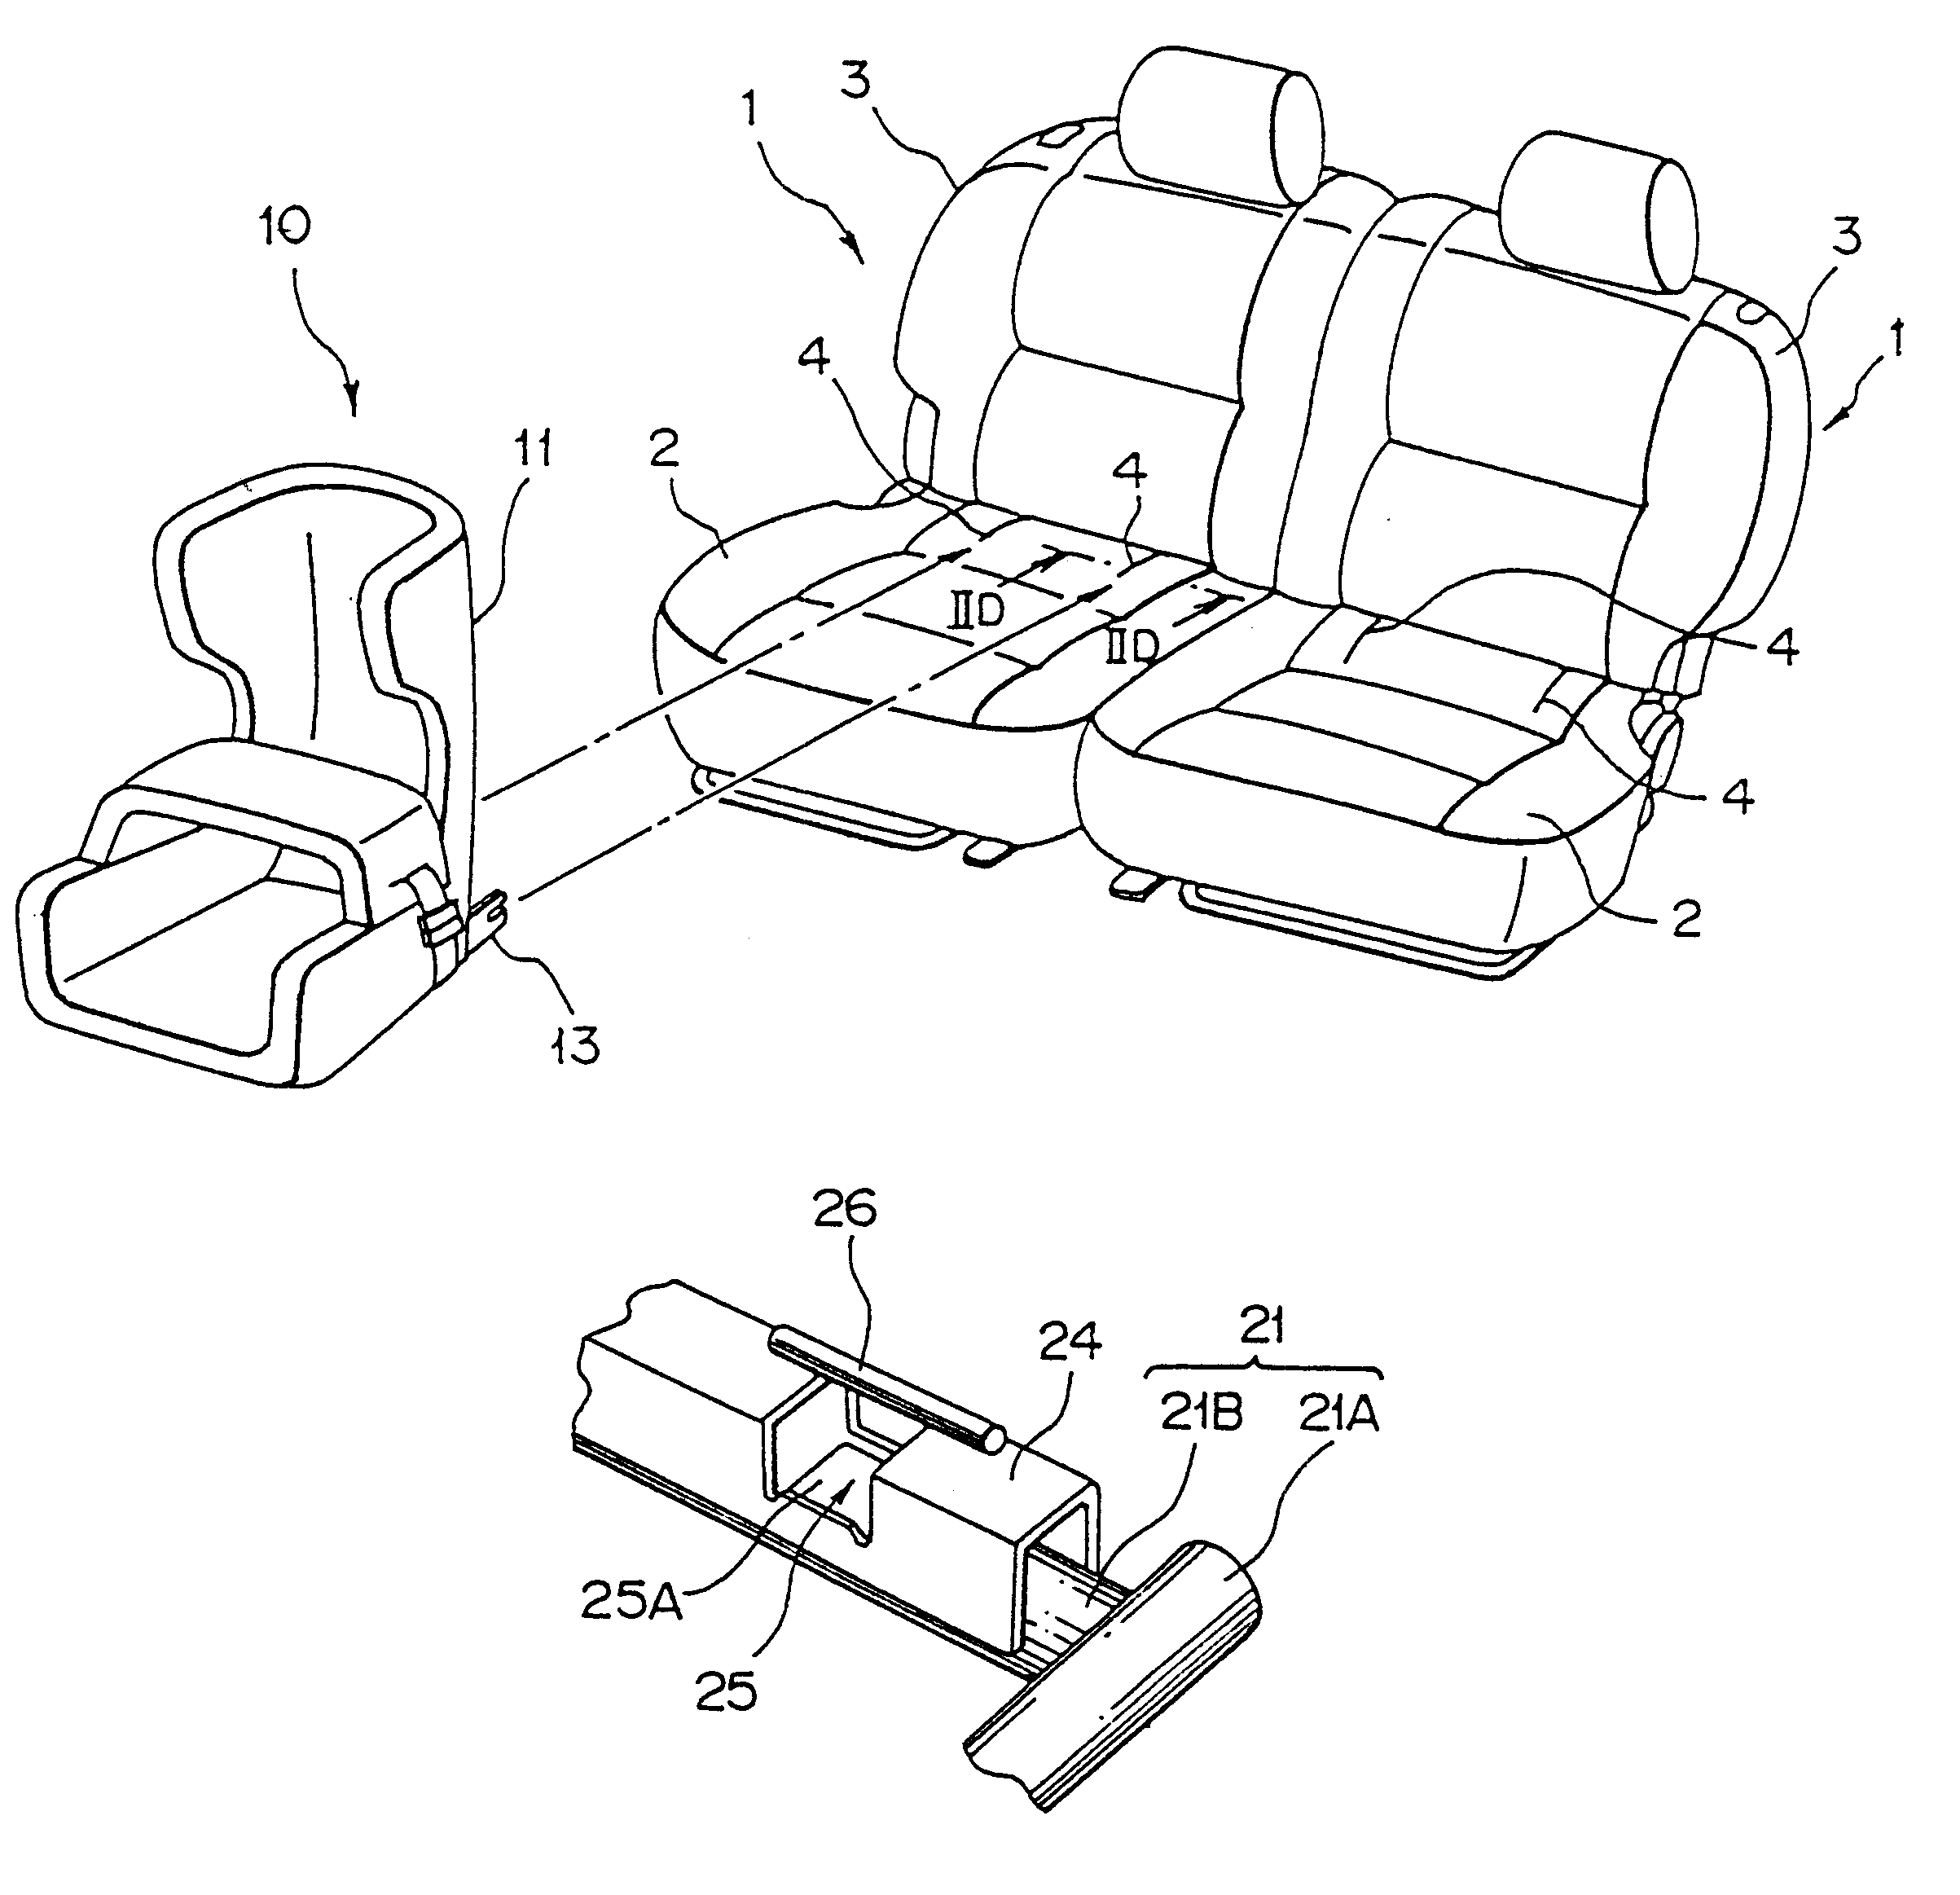 Vehicle seat construction